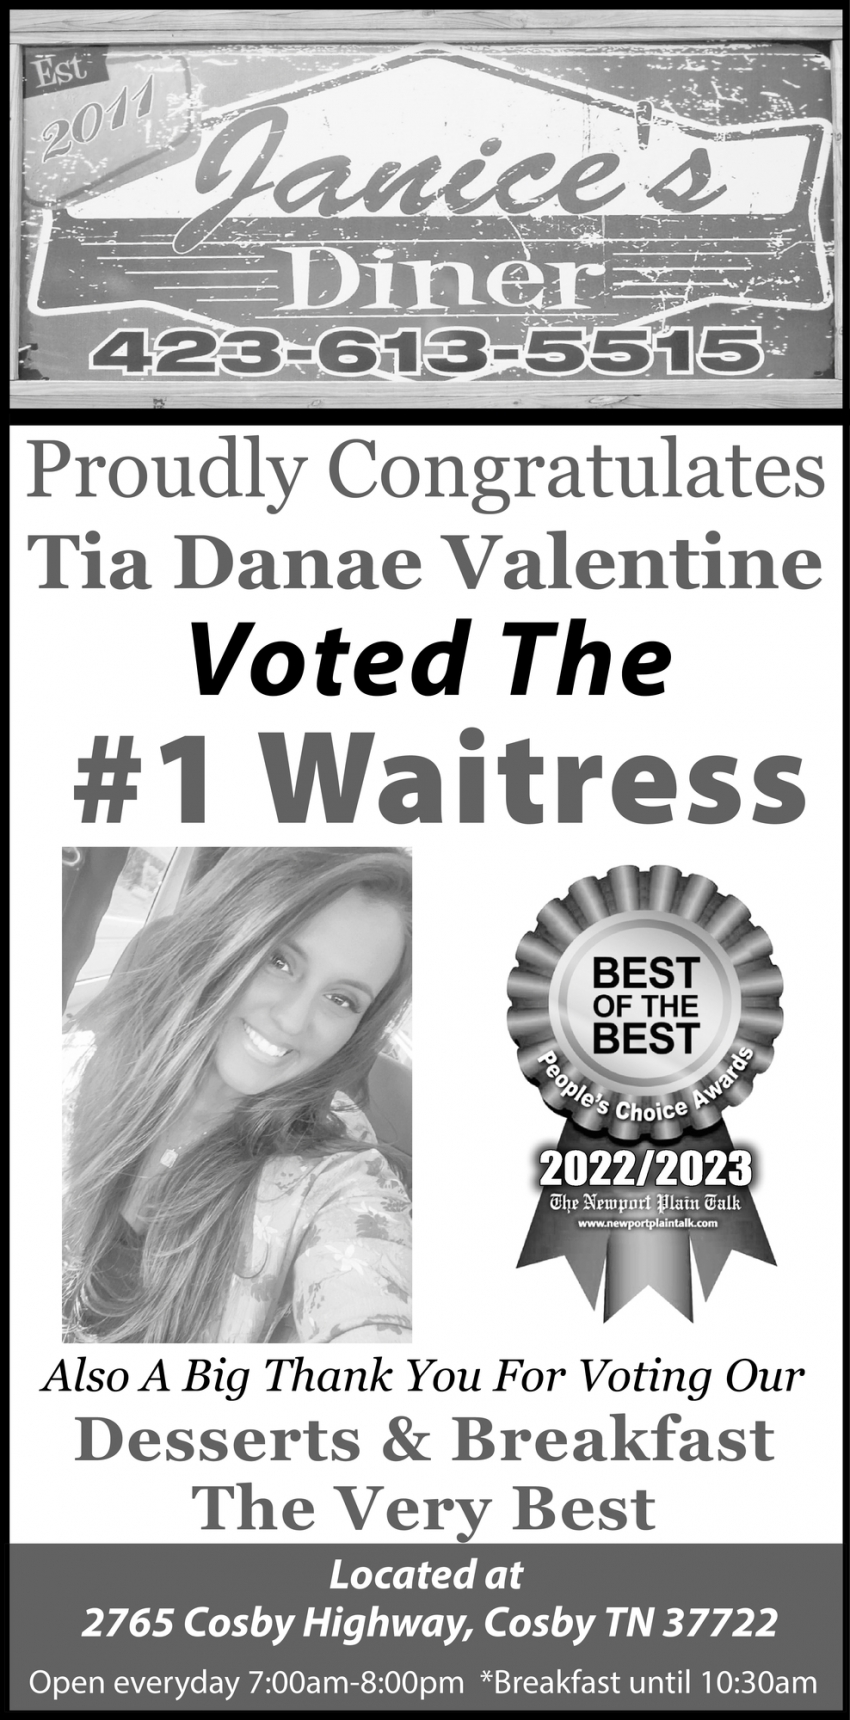 Voted The #1 Waitress